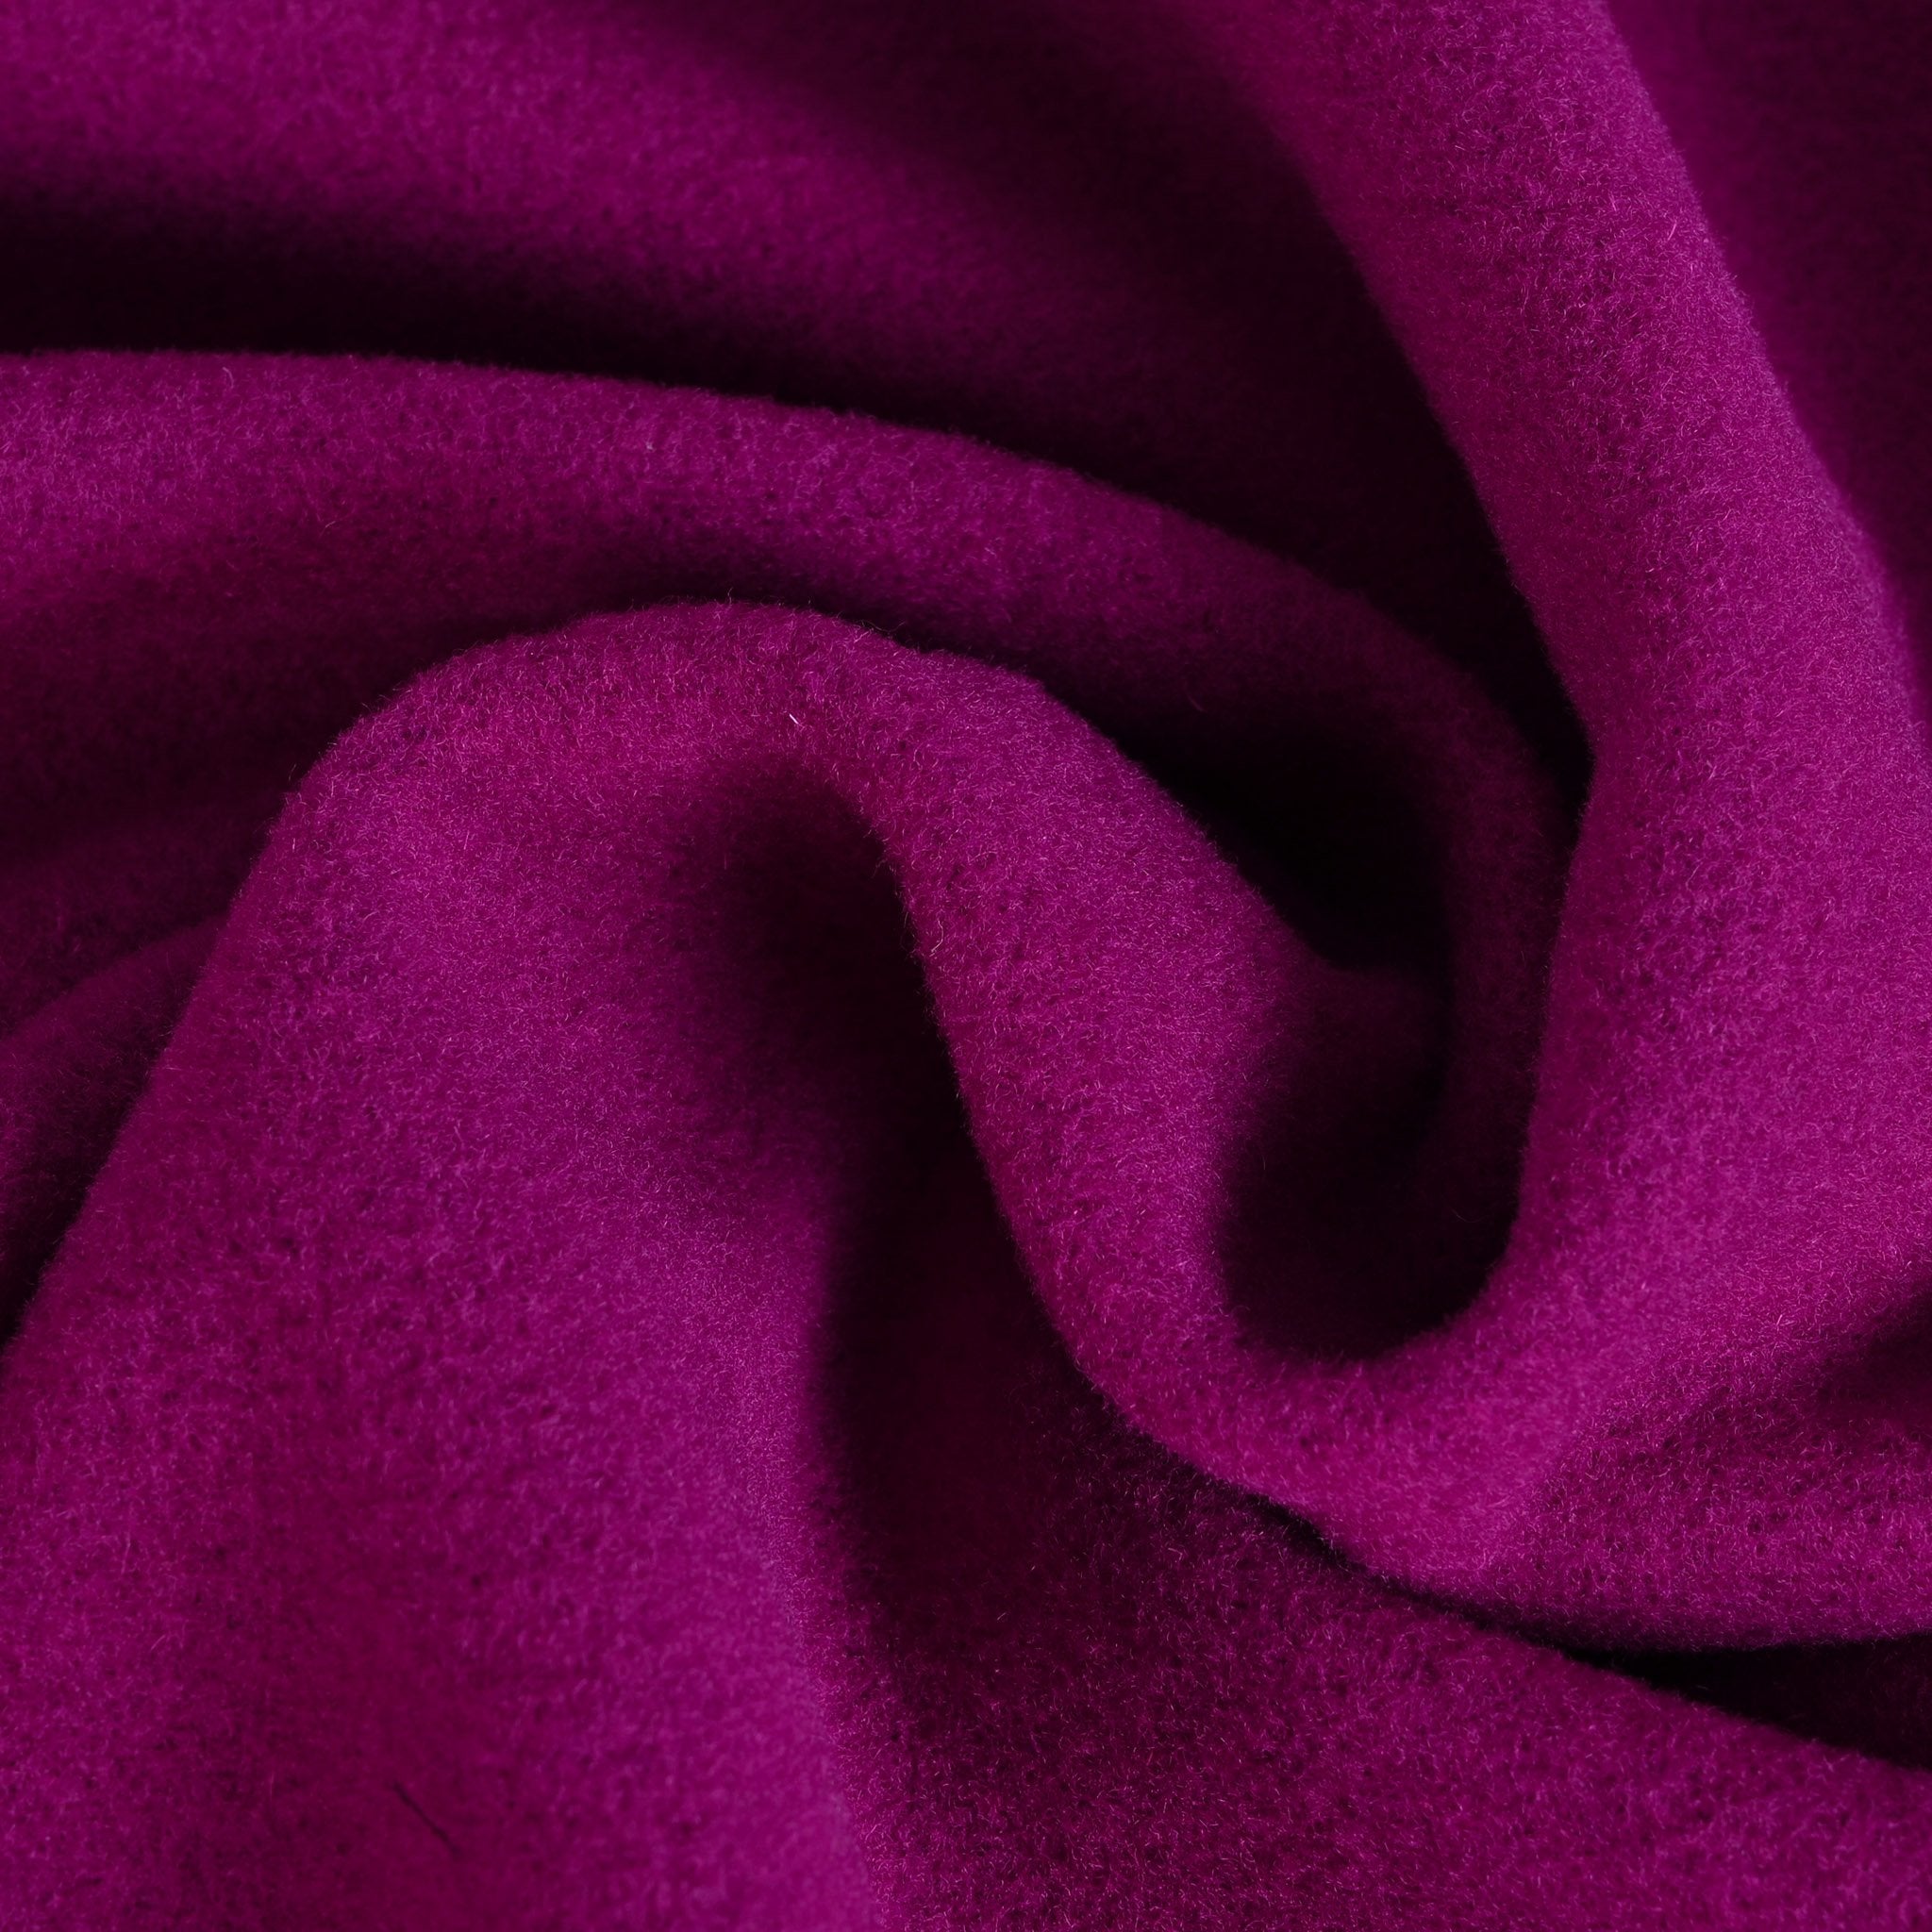 Purple Coating Fabric 5075